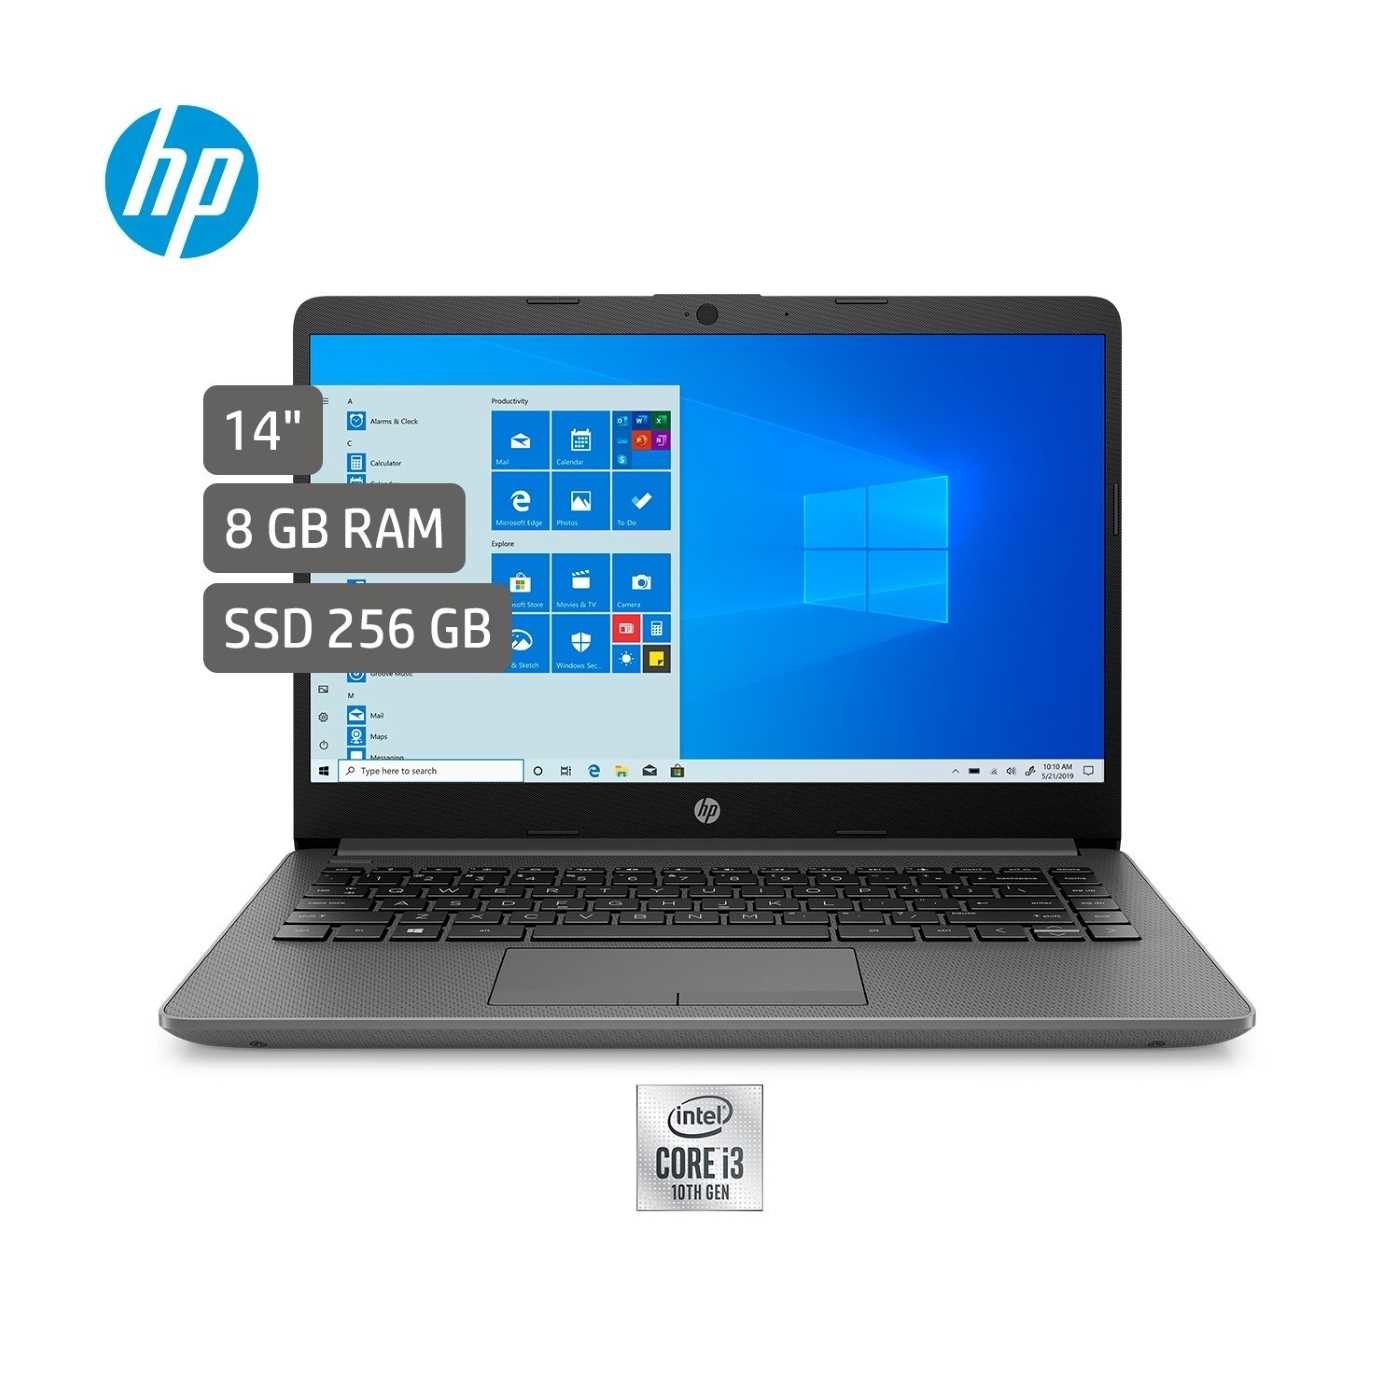 Computador Portátil HP 14" Pulgadas cf2067la - Intel Core i3 - RAM 8GB - Disco SSD 256 GB - Gris